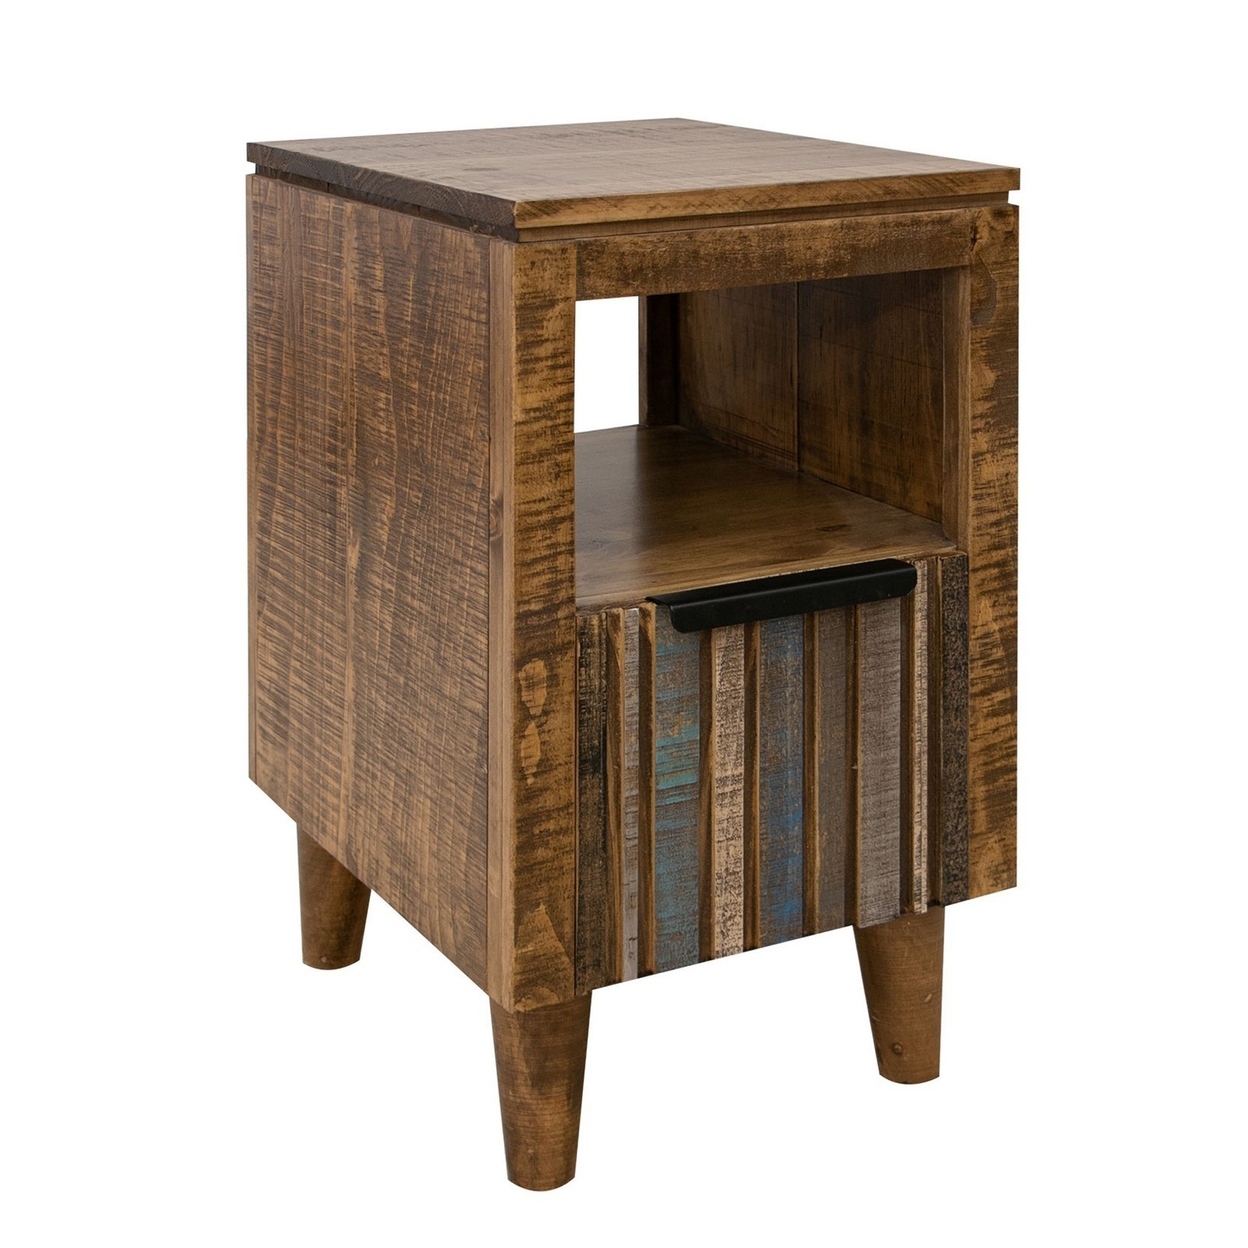 Texu 26 Inch Chairside Table, Pine Wood, 1 Drawer, Open Shelf, Brown, Blue - Saltoro Sherpi